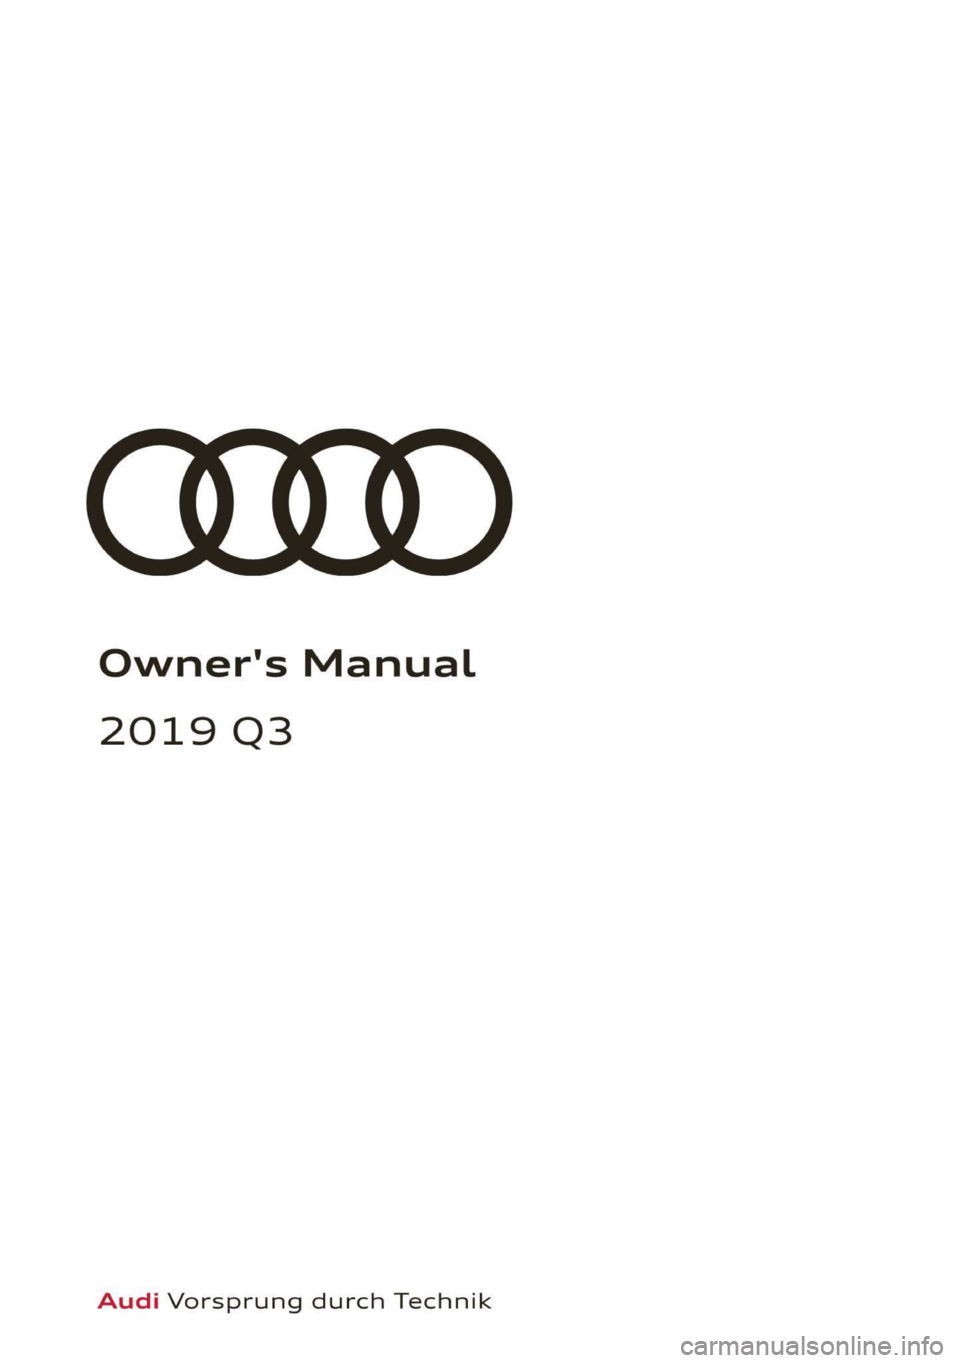 AUDI Q3 2019  Owners Manual Owner's Manual 
2019 Q3 
Audi Vorsprung durch Technik  